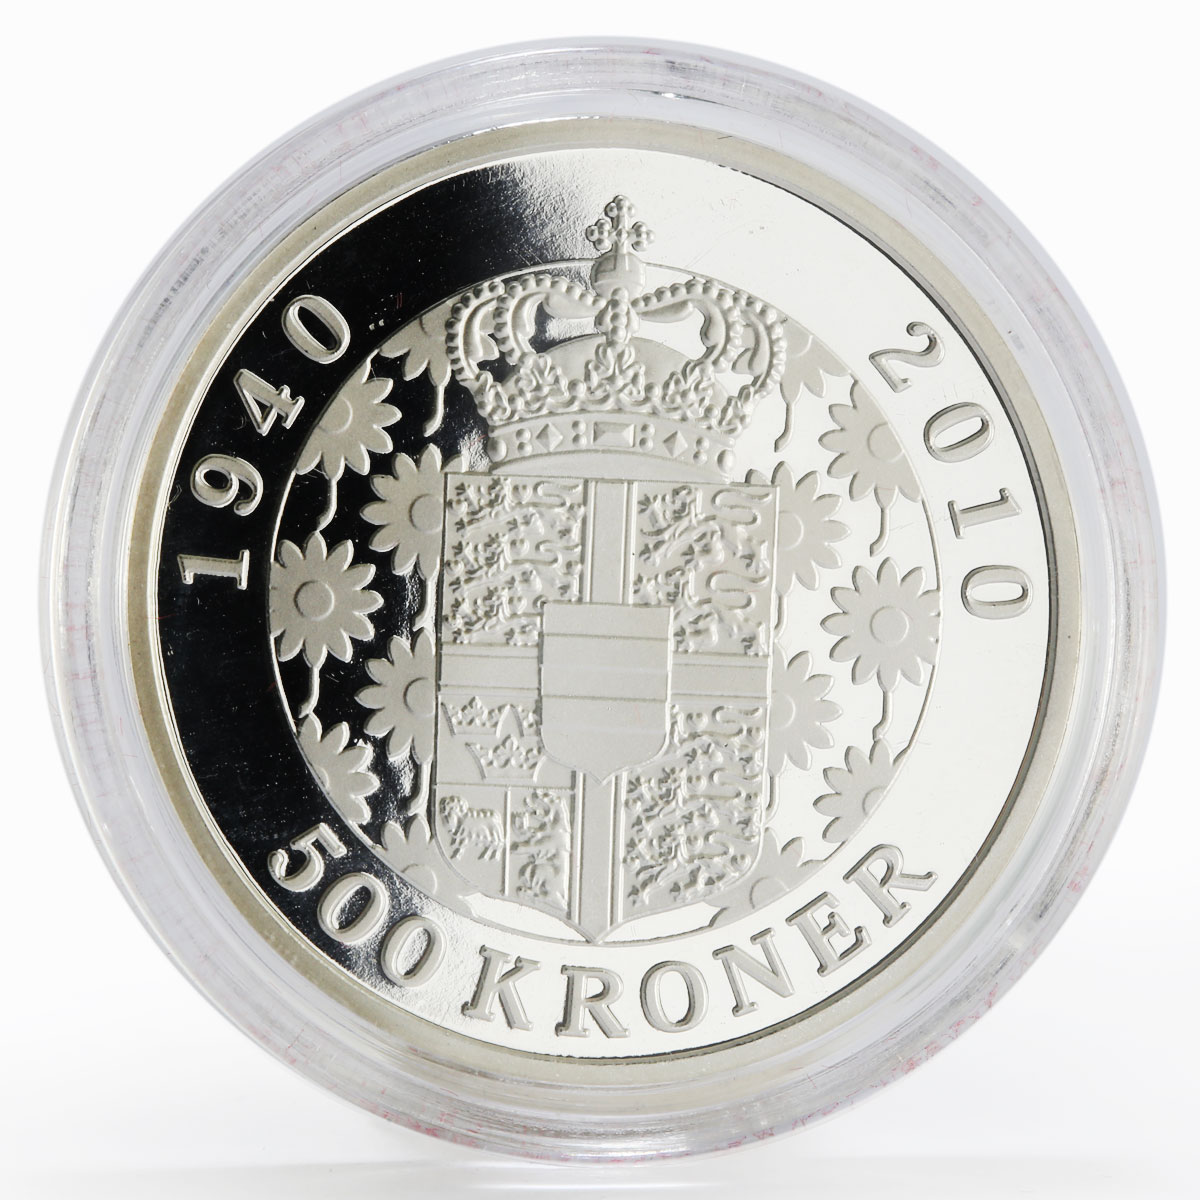 Denmark 500 kroner 70th Birthday of Margarethe II proof silver coin 2010